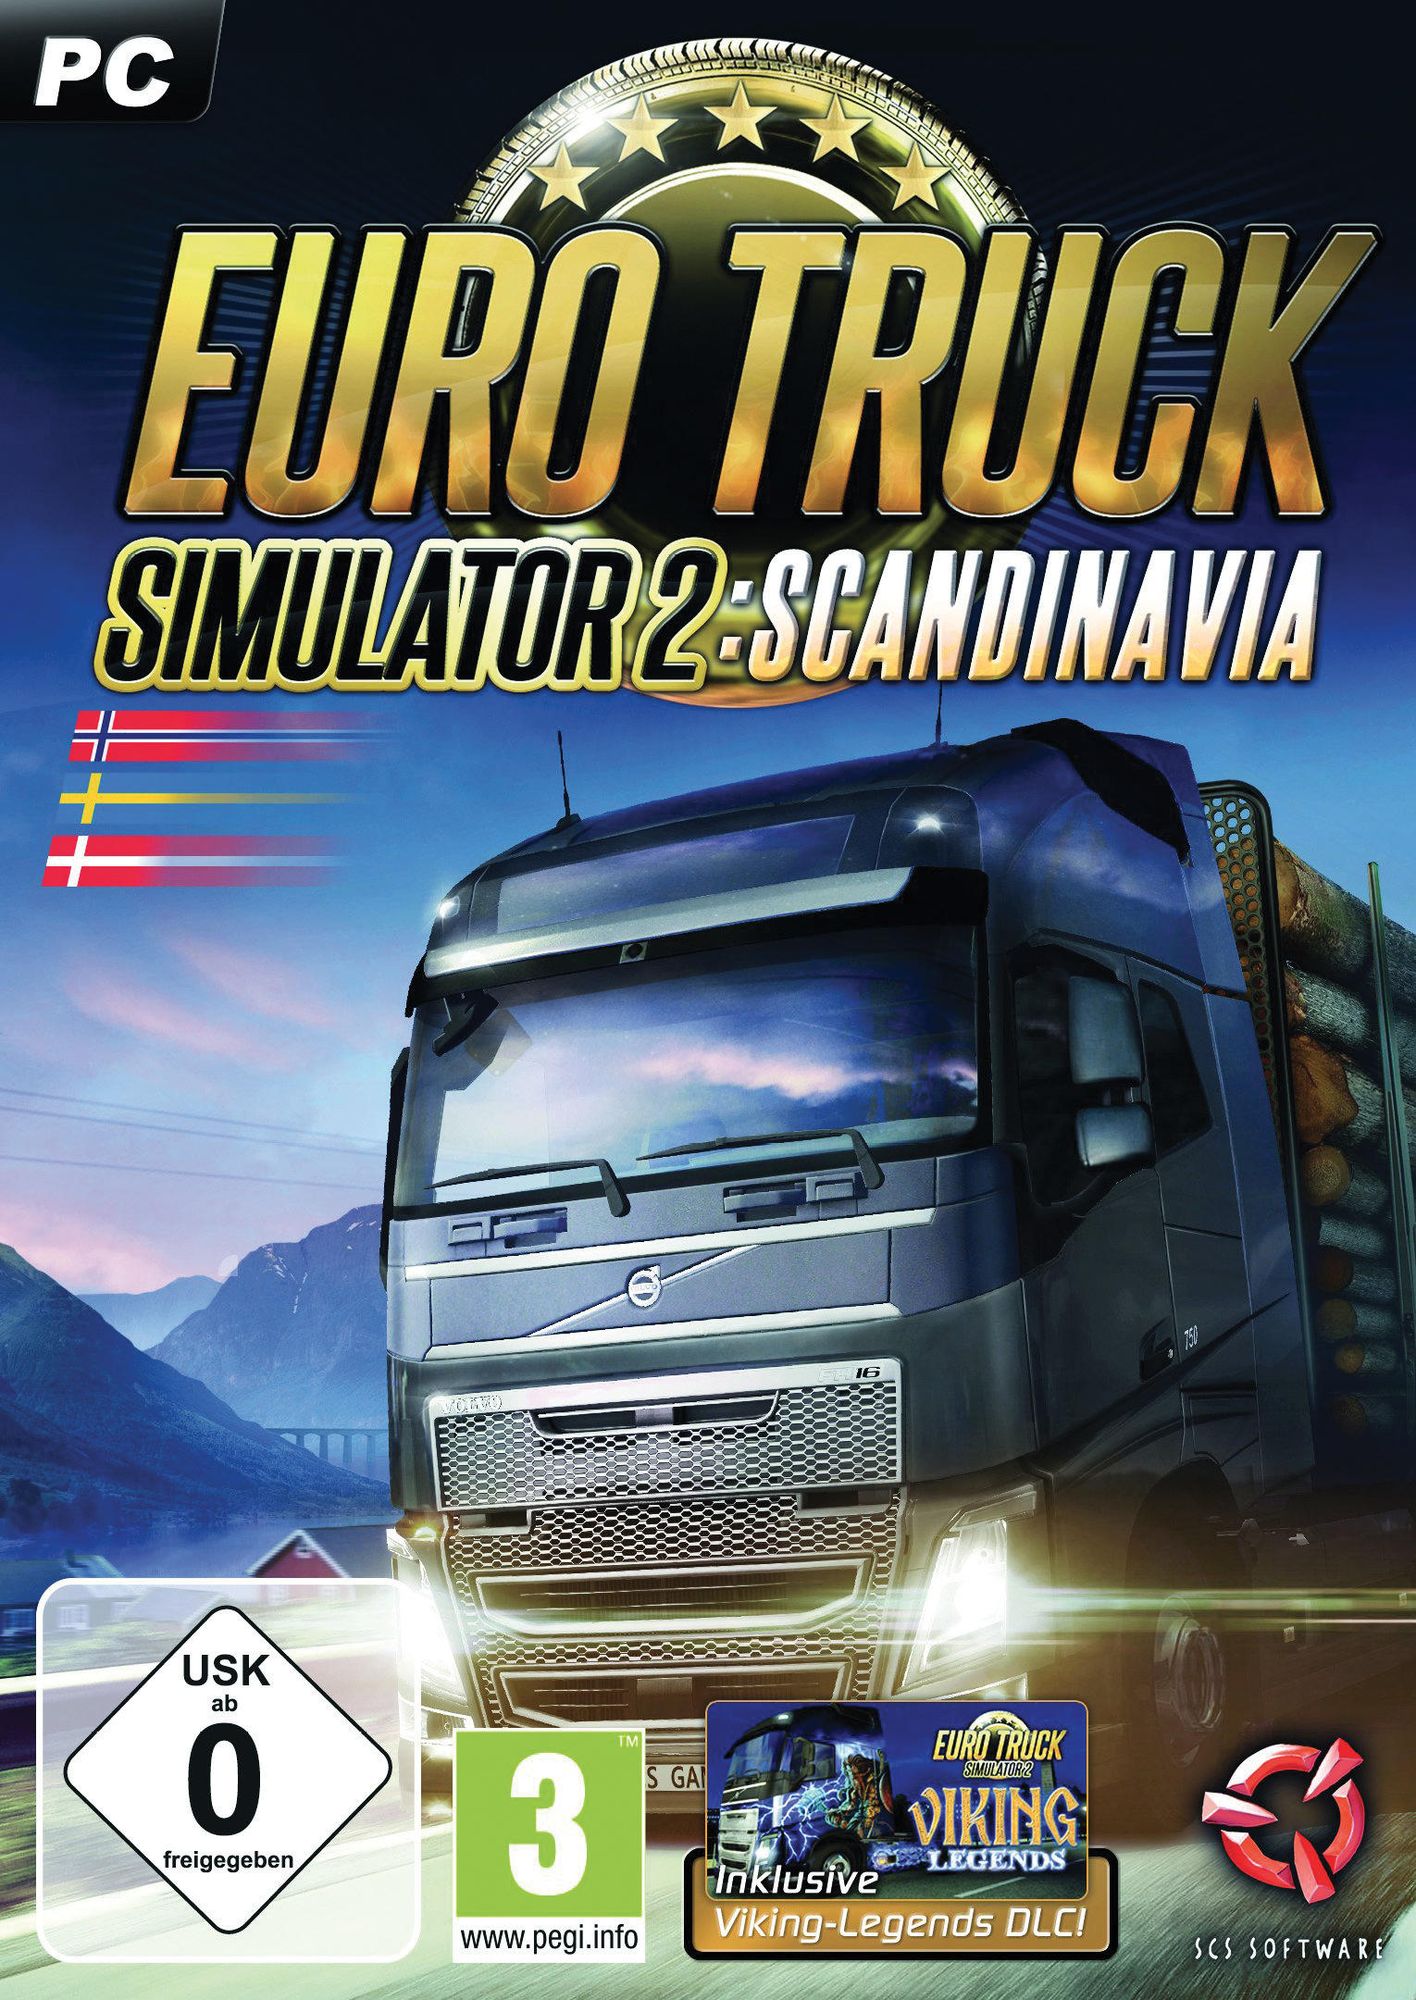 https://images.thalia.media/-/BF2000-2000/d6612015ee254ddda1356e8246c8fbb4/euro-truck-simulator-2-scandinavia-add-on-pc.jpeg